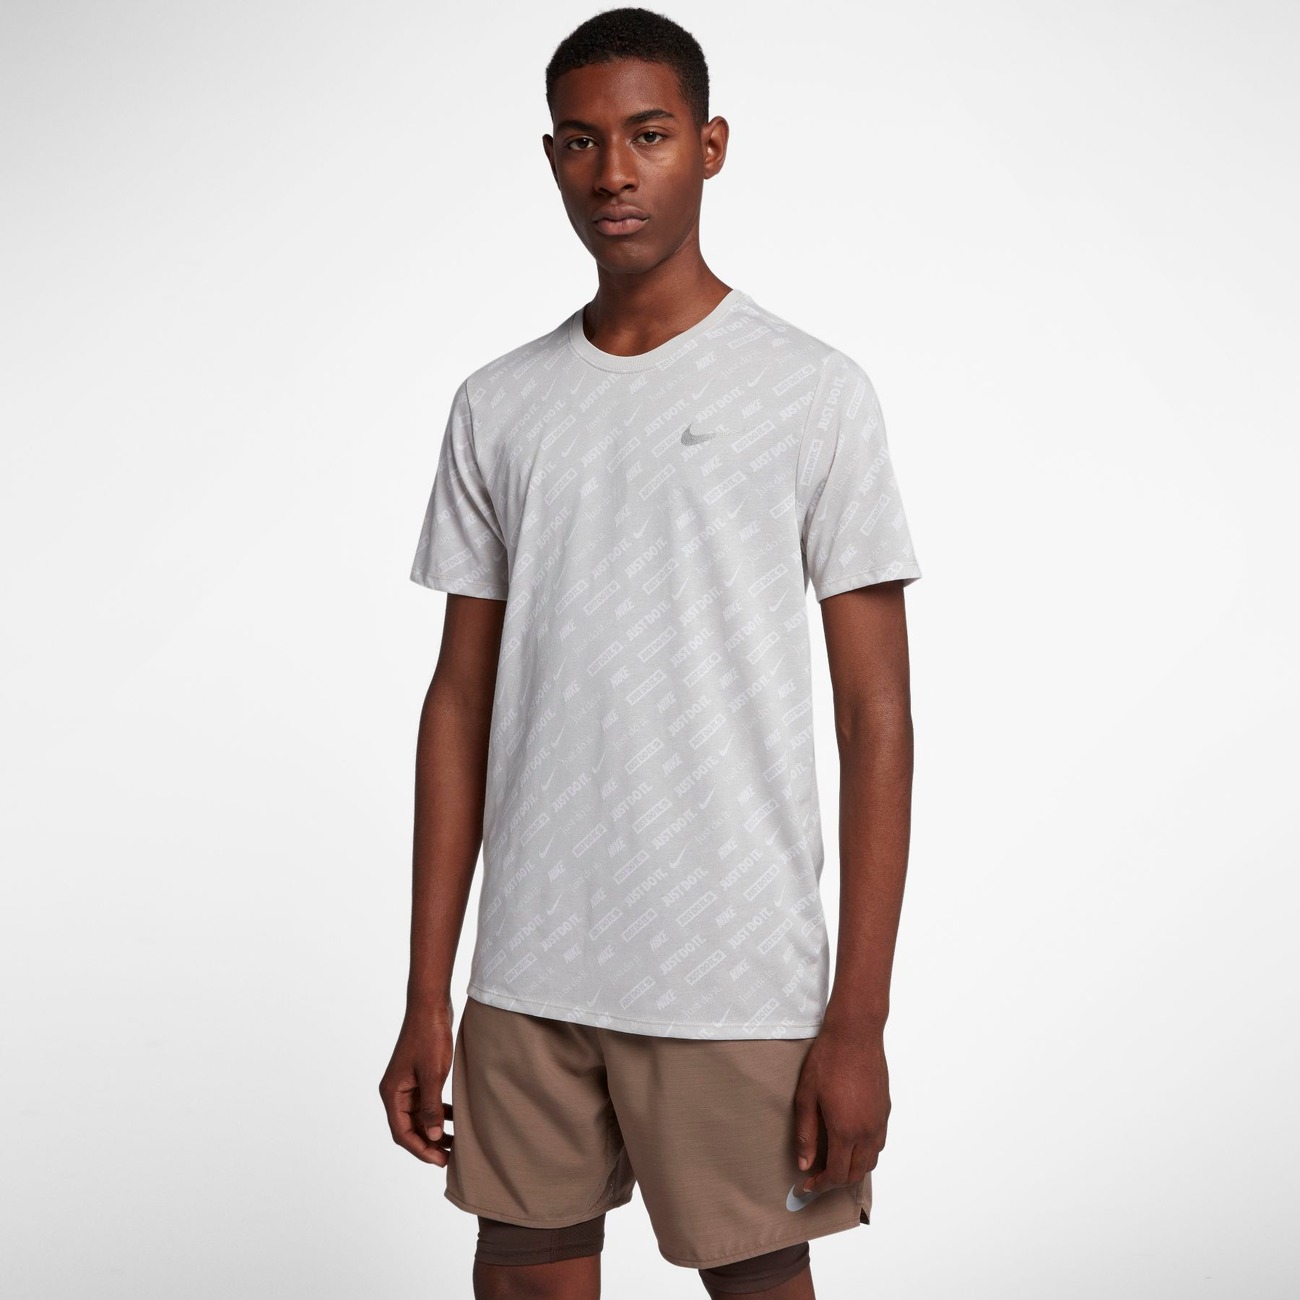 Camiseta Nike Dri-Fit Masculina - Foto 1